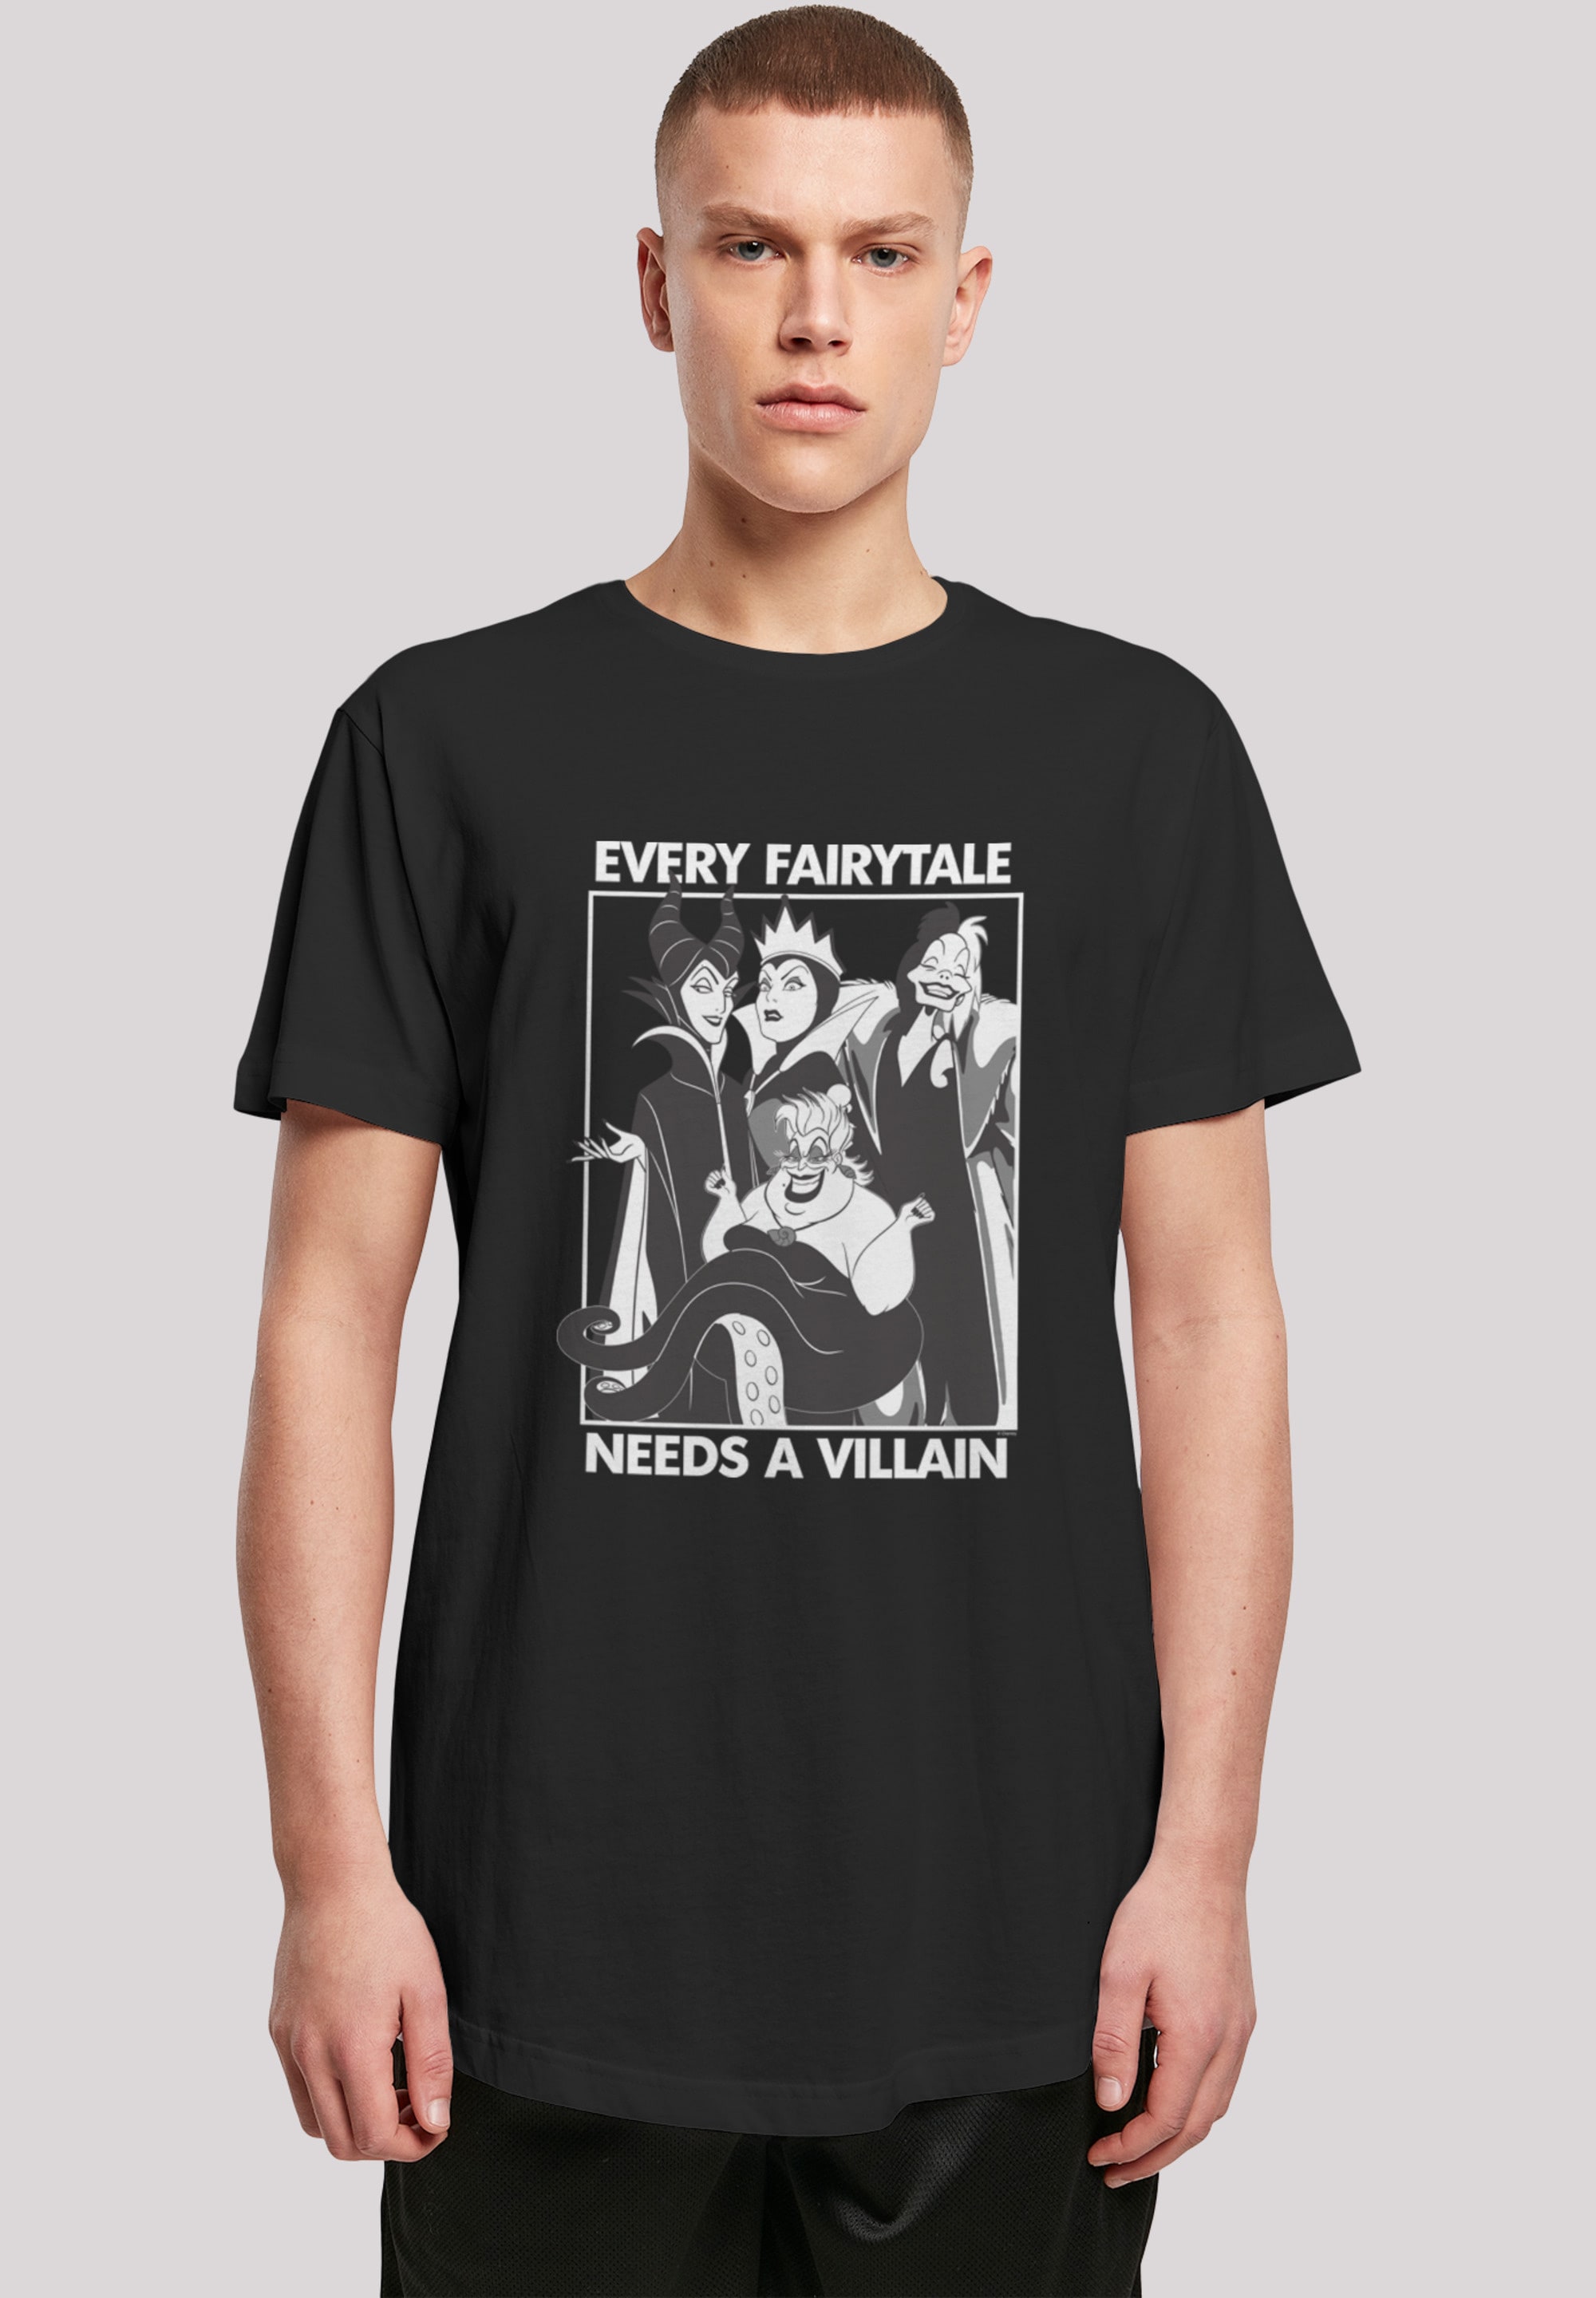 F4NT4STIC ▷ T-Shirt Print Tale kaufen Villain\'«, Needs »Every | A BAUR Fairy